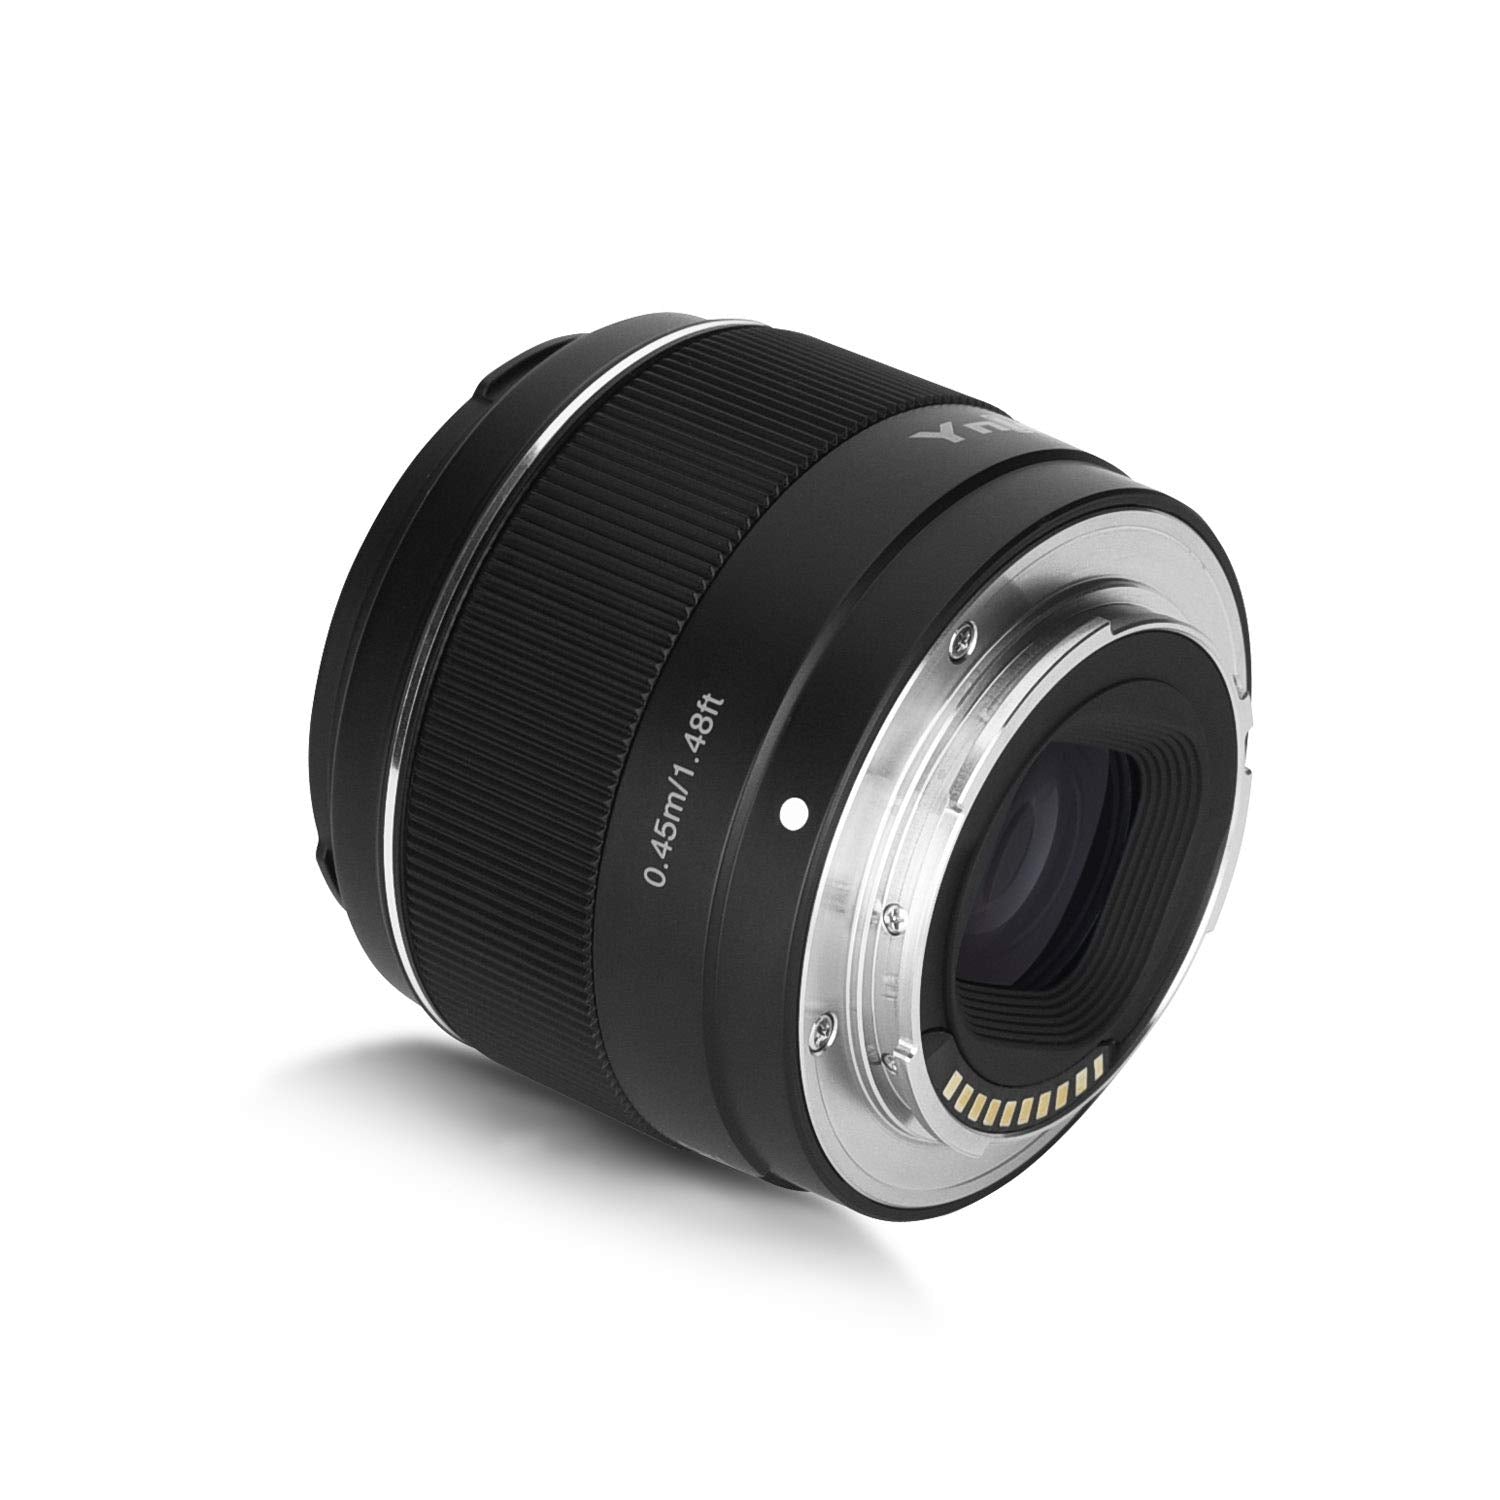 YONGNUO YN50mm F1.8S Lens, 50mm F1.8 Larege Aperture, APS-C Standard Prime E-Mount, Auto Manual Focus AF MF USB for Sony Cameras Black